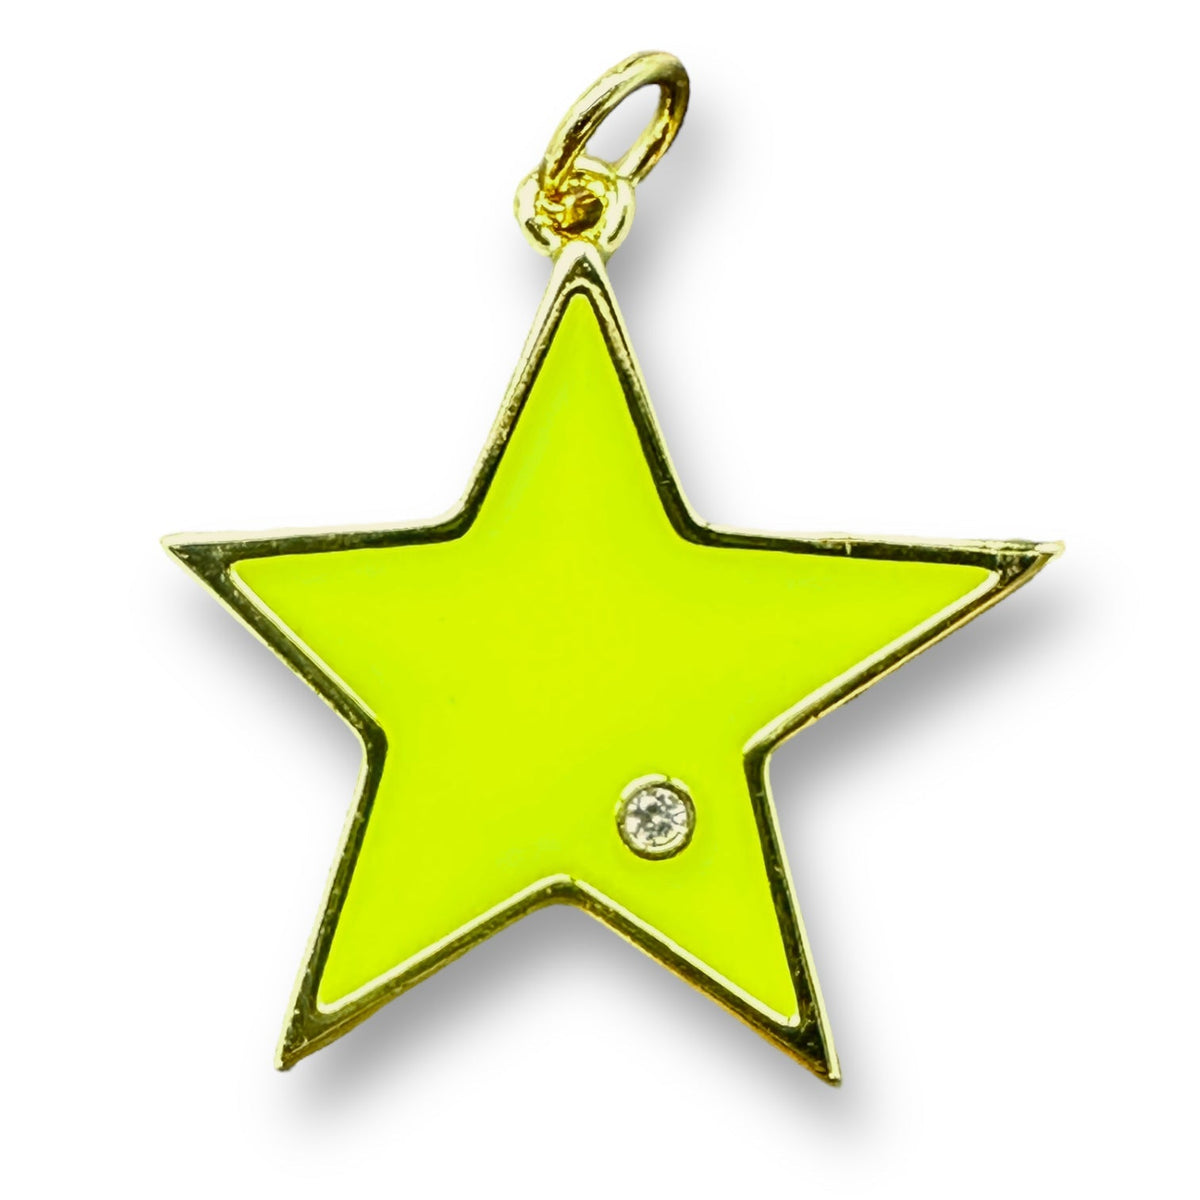 Bedel emaille gekleurde ster met steentje 18K gold plated 24x23mm - per stuk-bedels-Kraaltjes van Renate